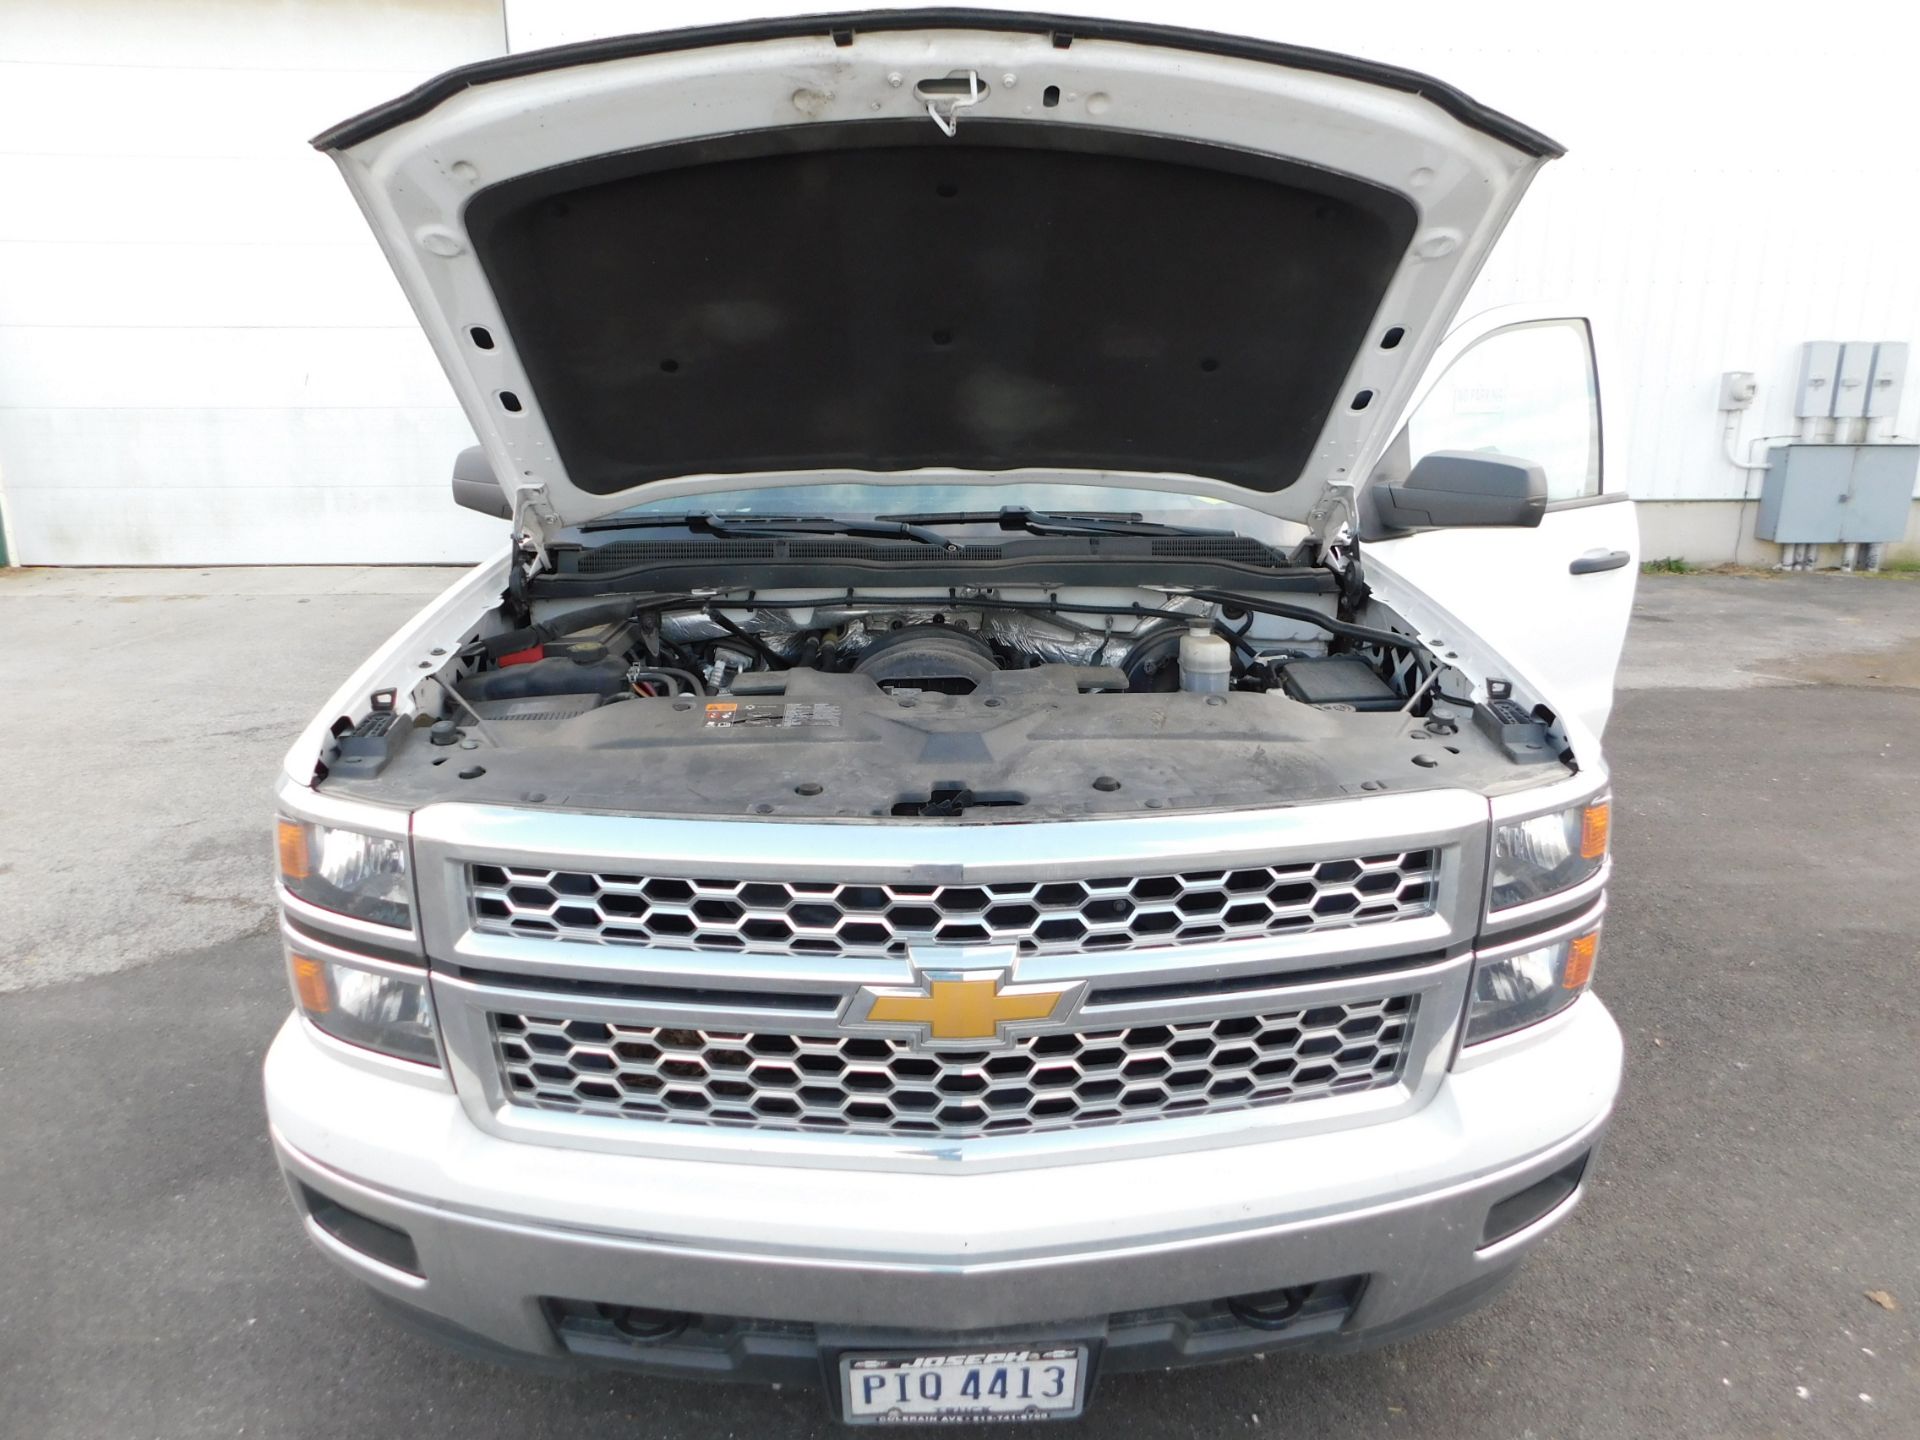 2014 Chevrolet Silverado LT Pickup, VIN 1GCVKREC3EZ139405, 4-Door 4 WD, Automatic, AM/FM, AC, Cruise - Image 17 of 51